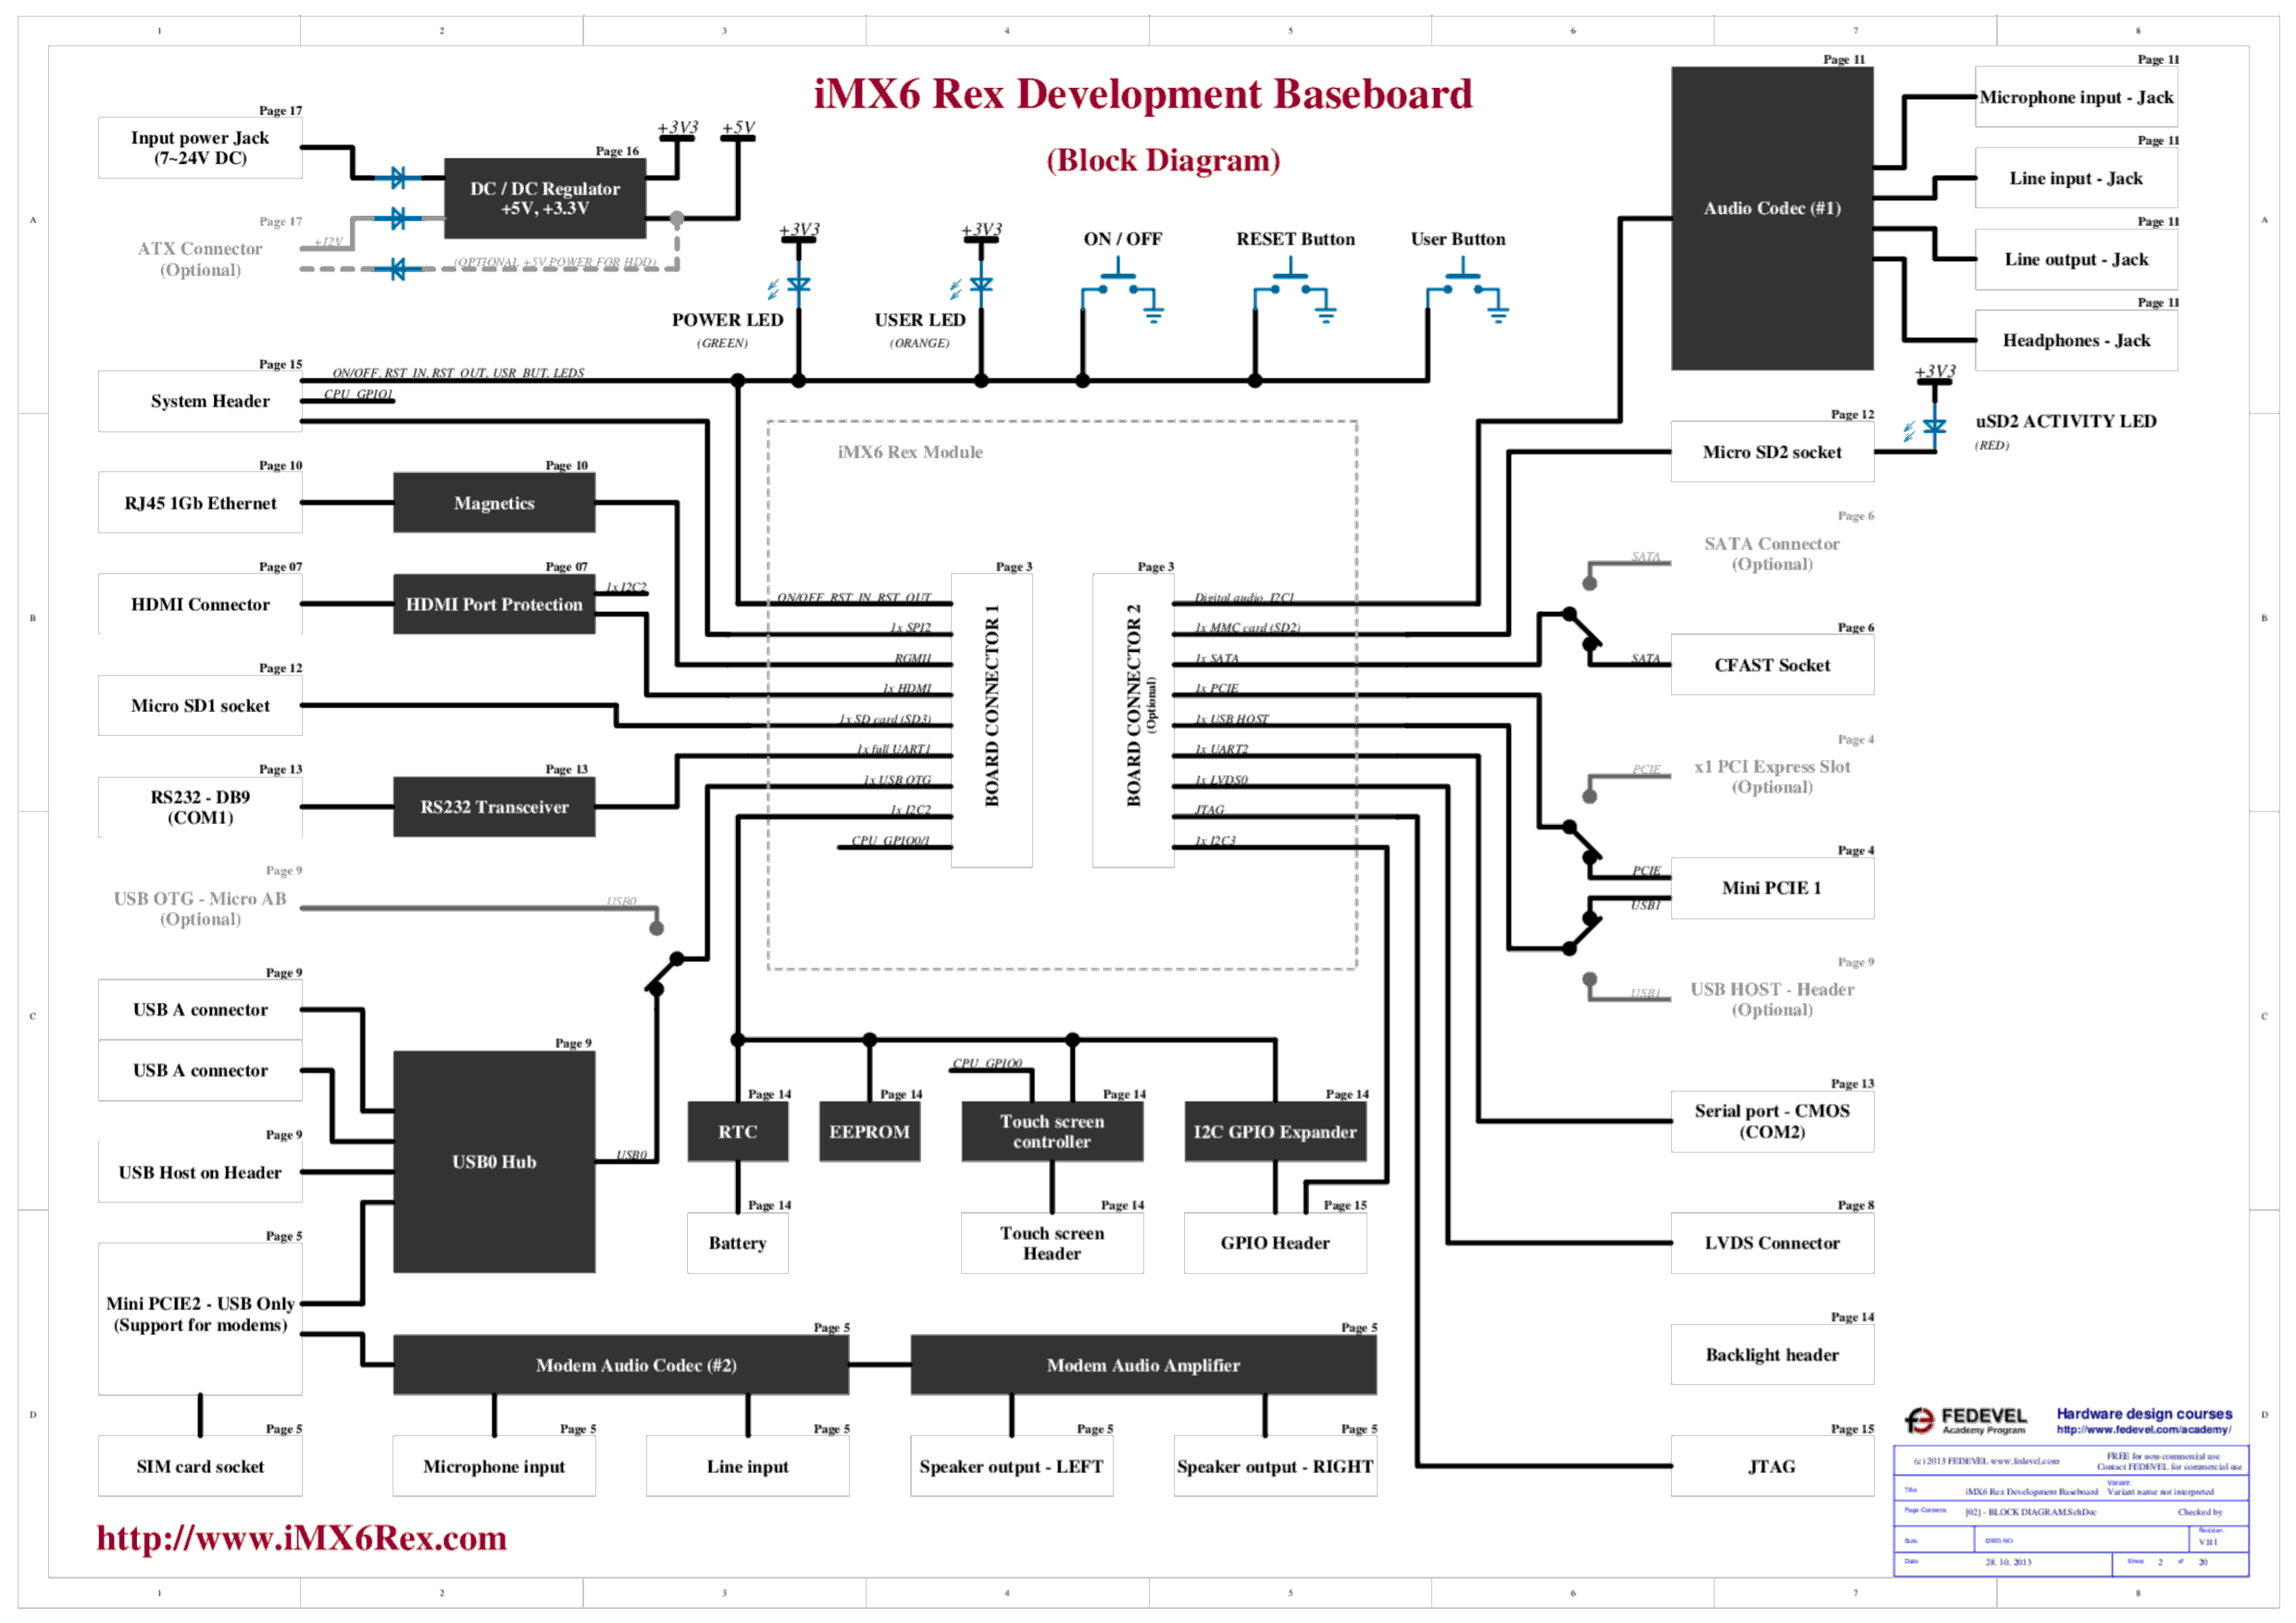 Imx6 Schematic, Imx6rex Development Baseboard Block Diagram Click To Enlarge Imx6, Imx6 Schematic